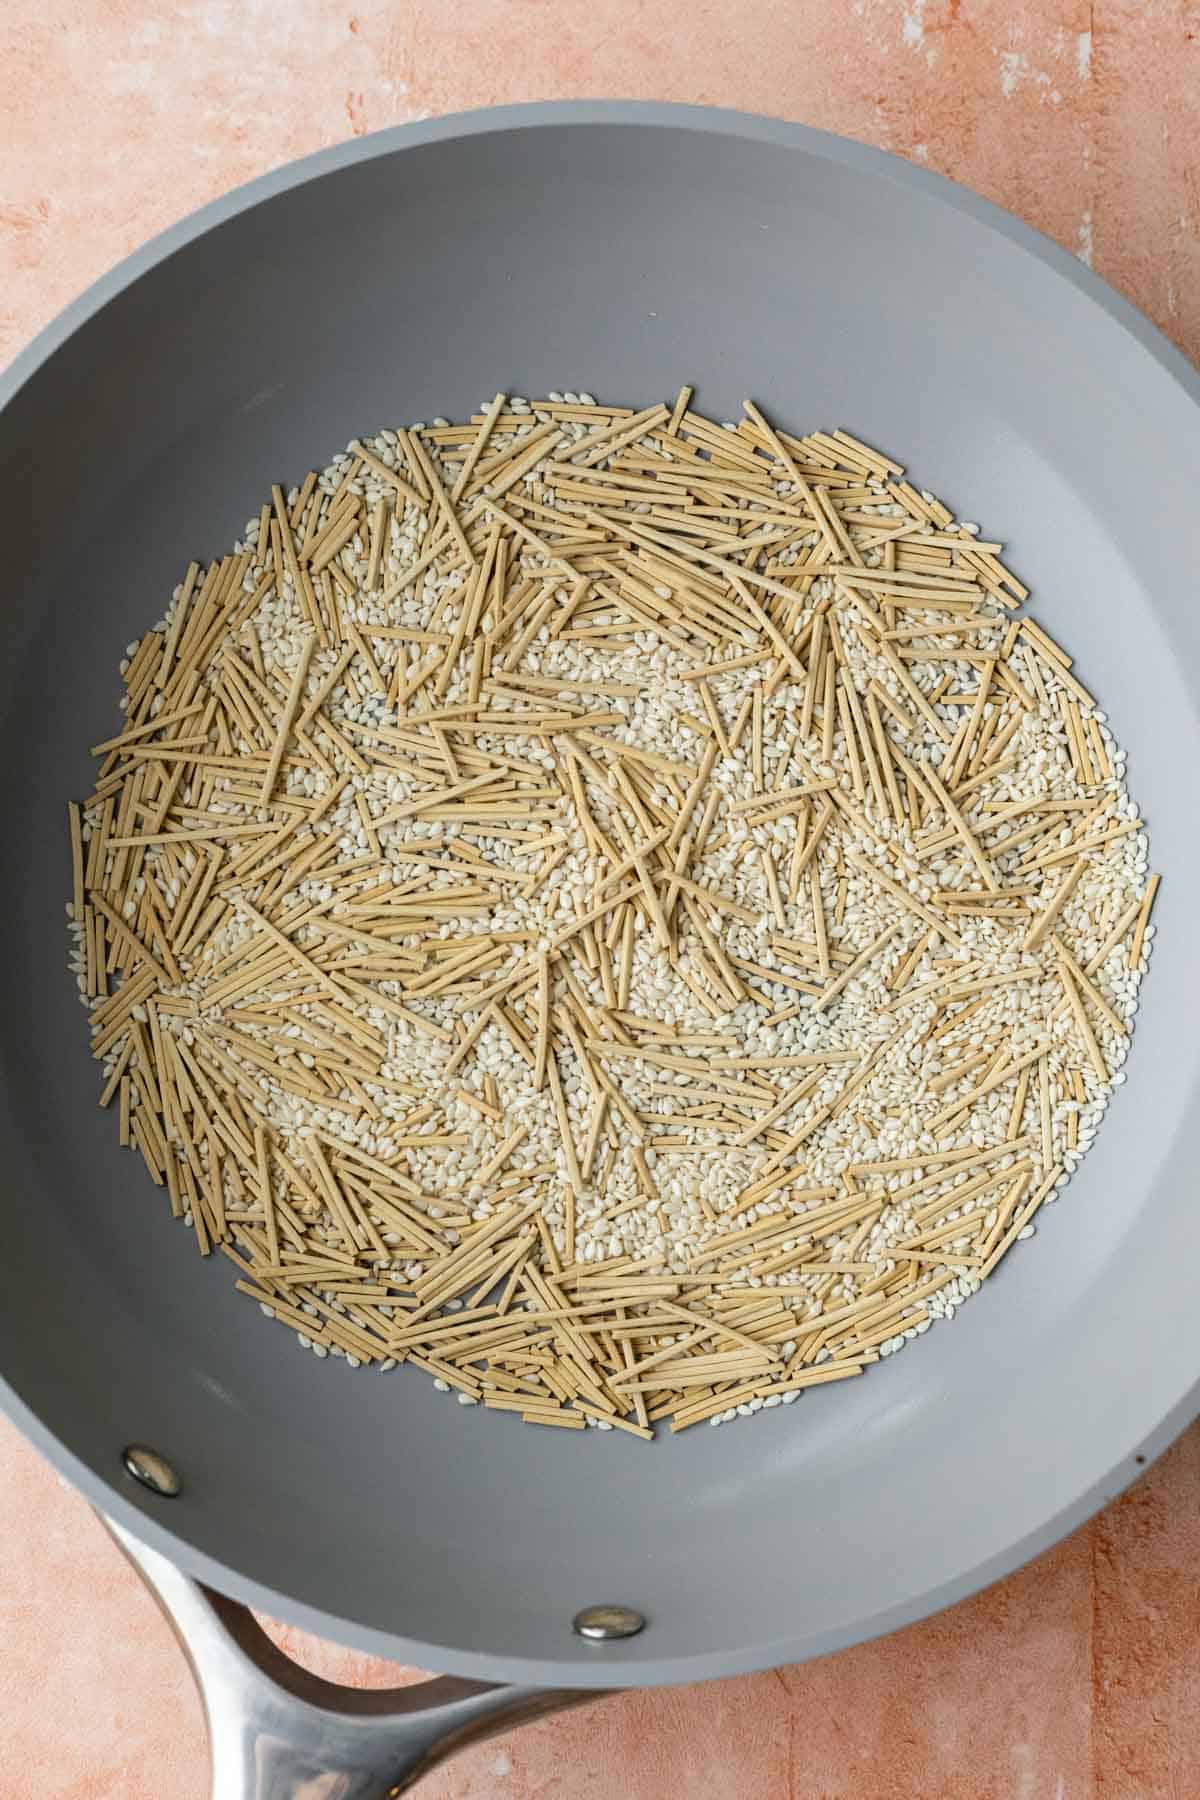 Toasting broken ramen noodles and sesame seeds in a pan.